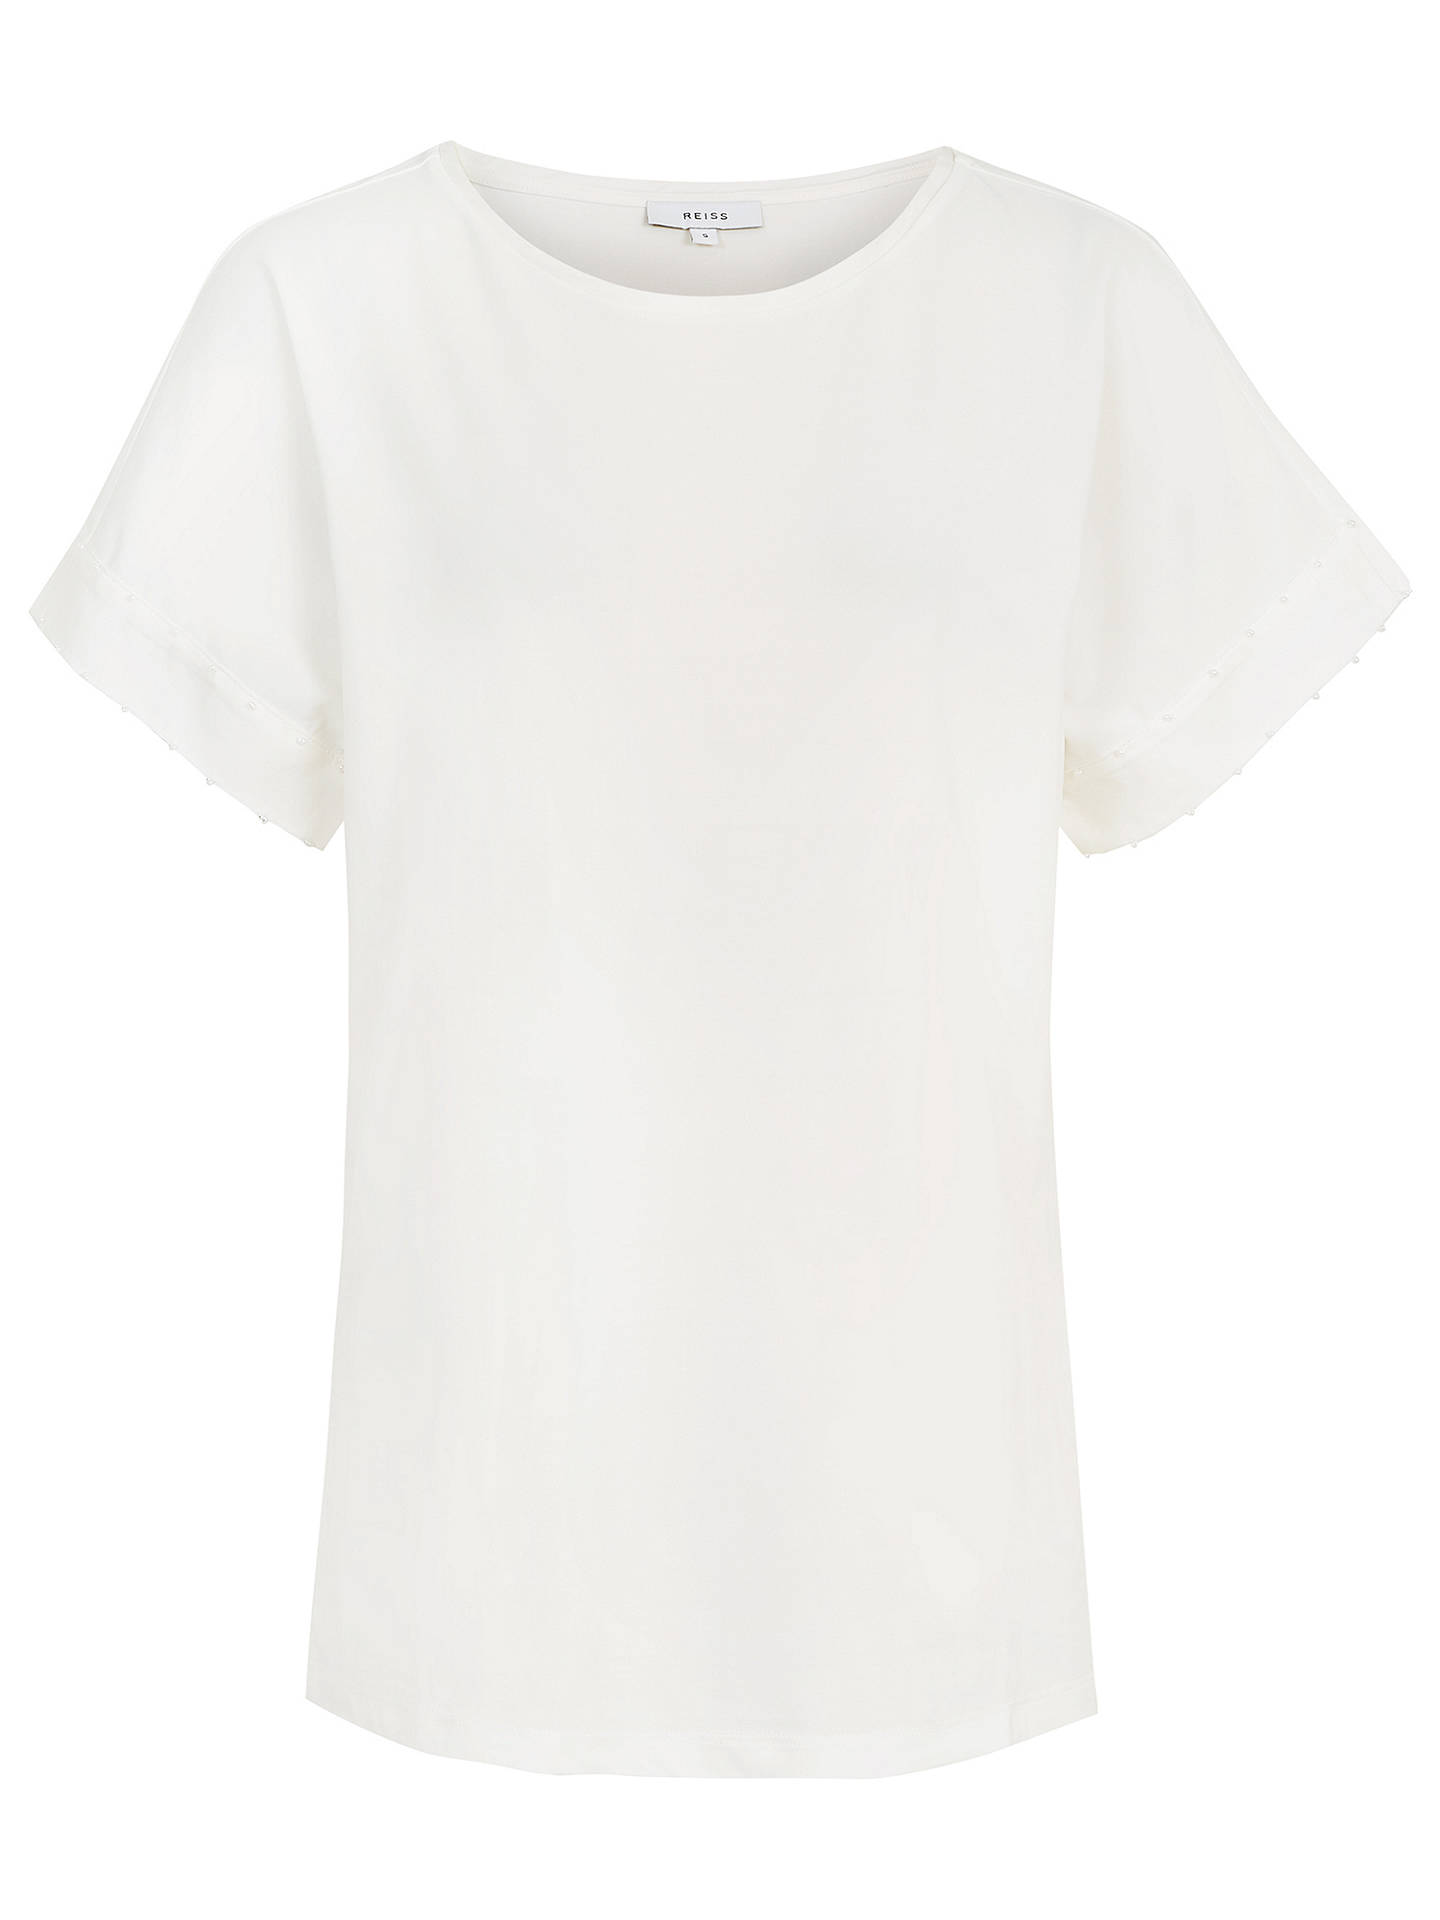 Reiss Perlan Beaded T-Shirt, Off White at John Lewis & Partners